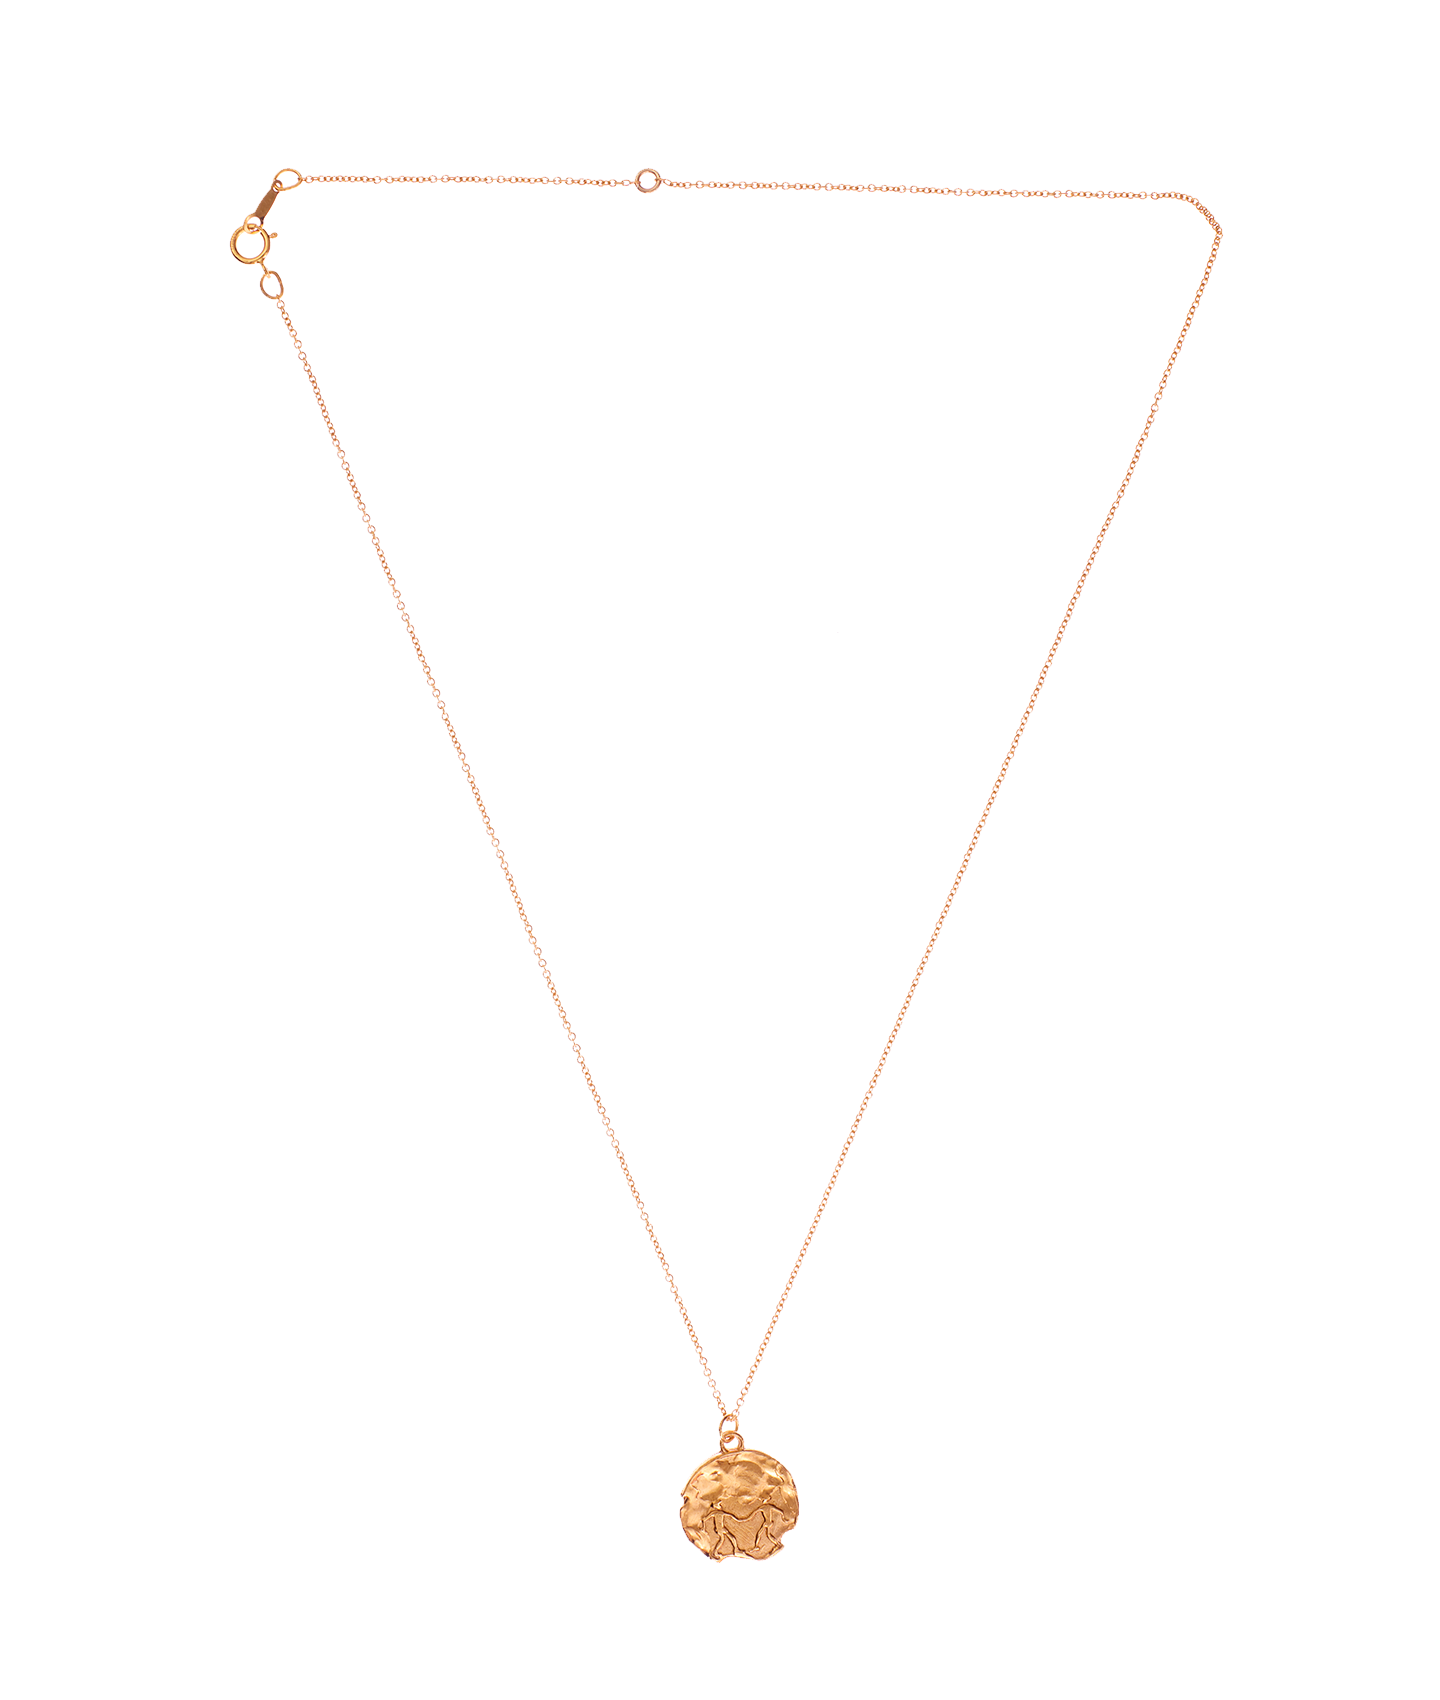 The Gemini Medallion